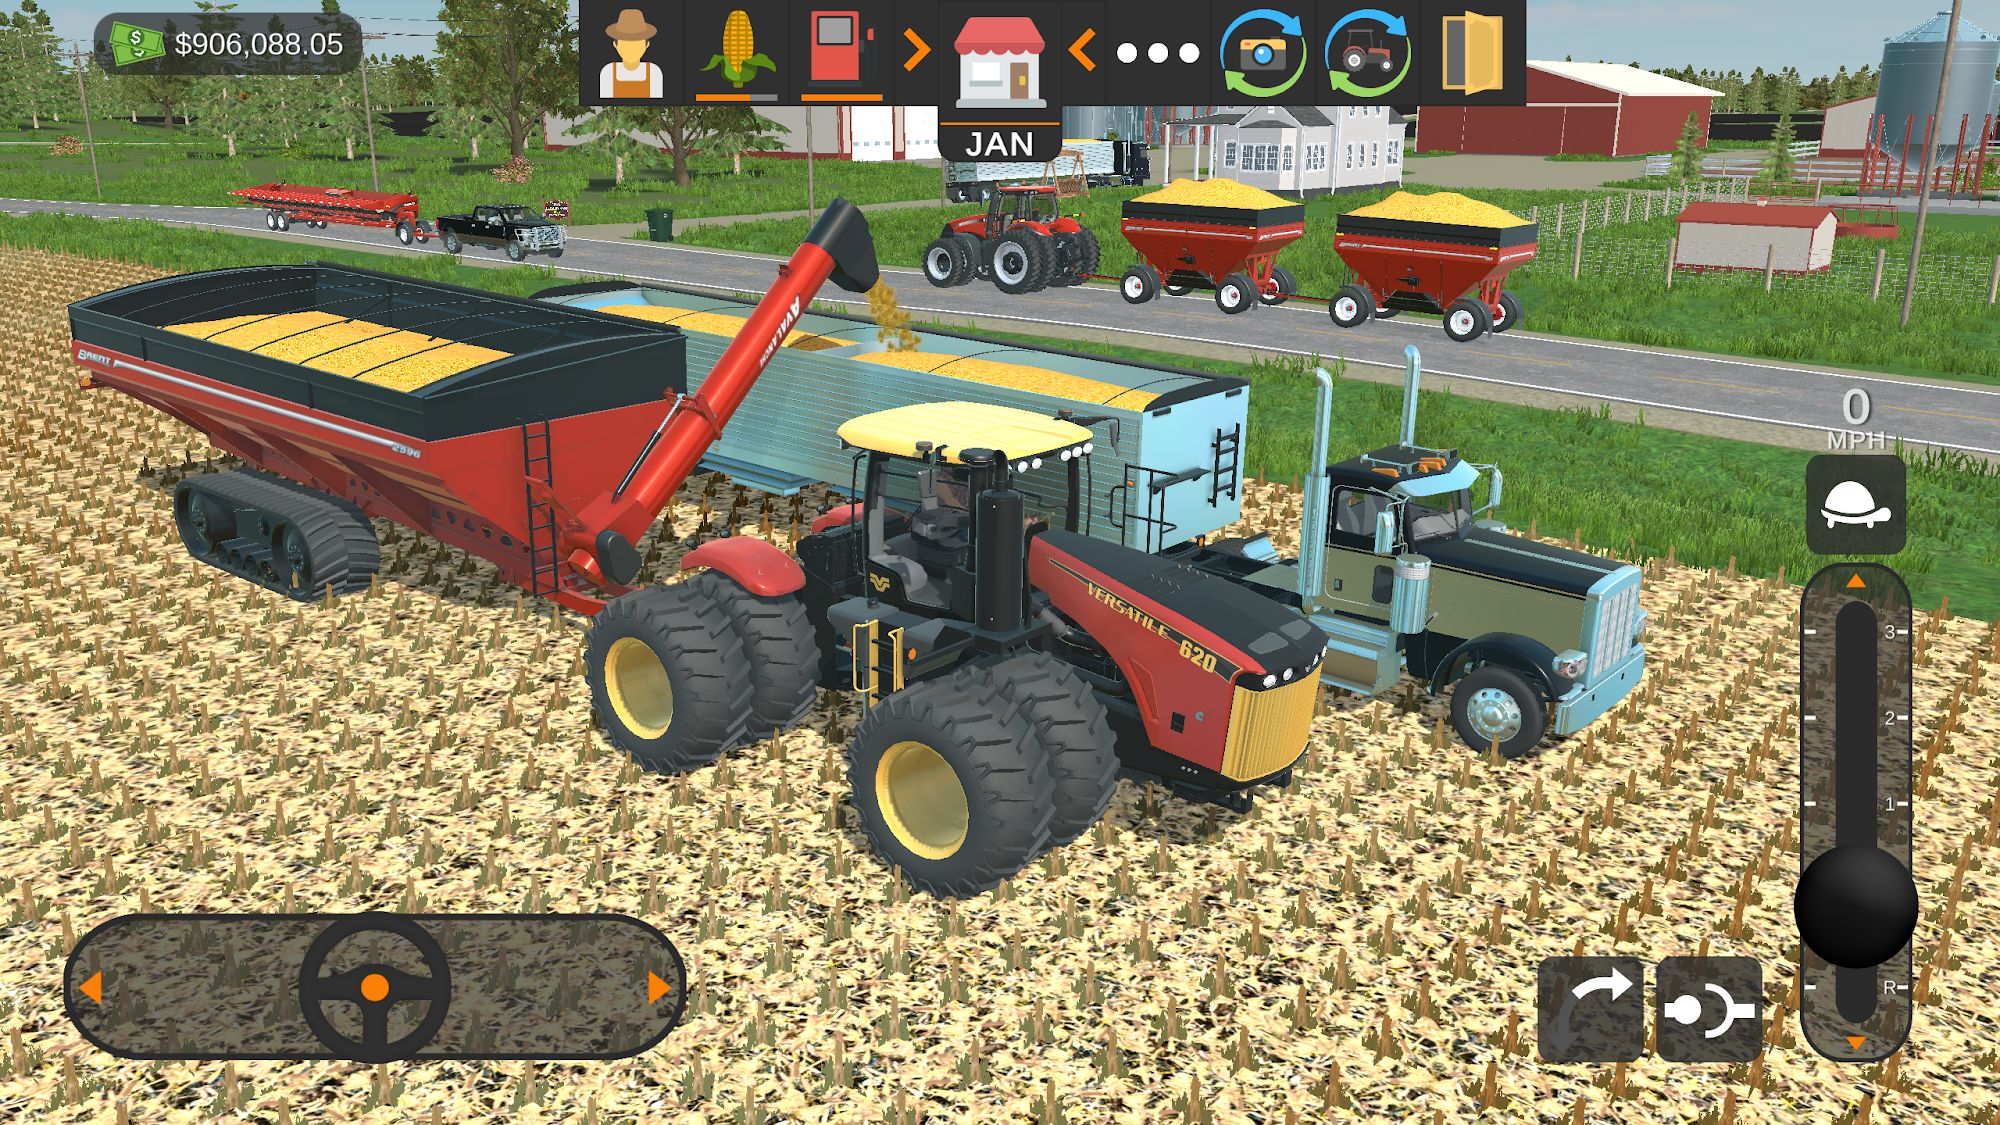 American Farming - Android game screenshots.